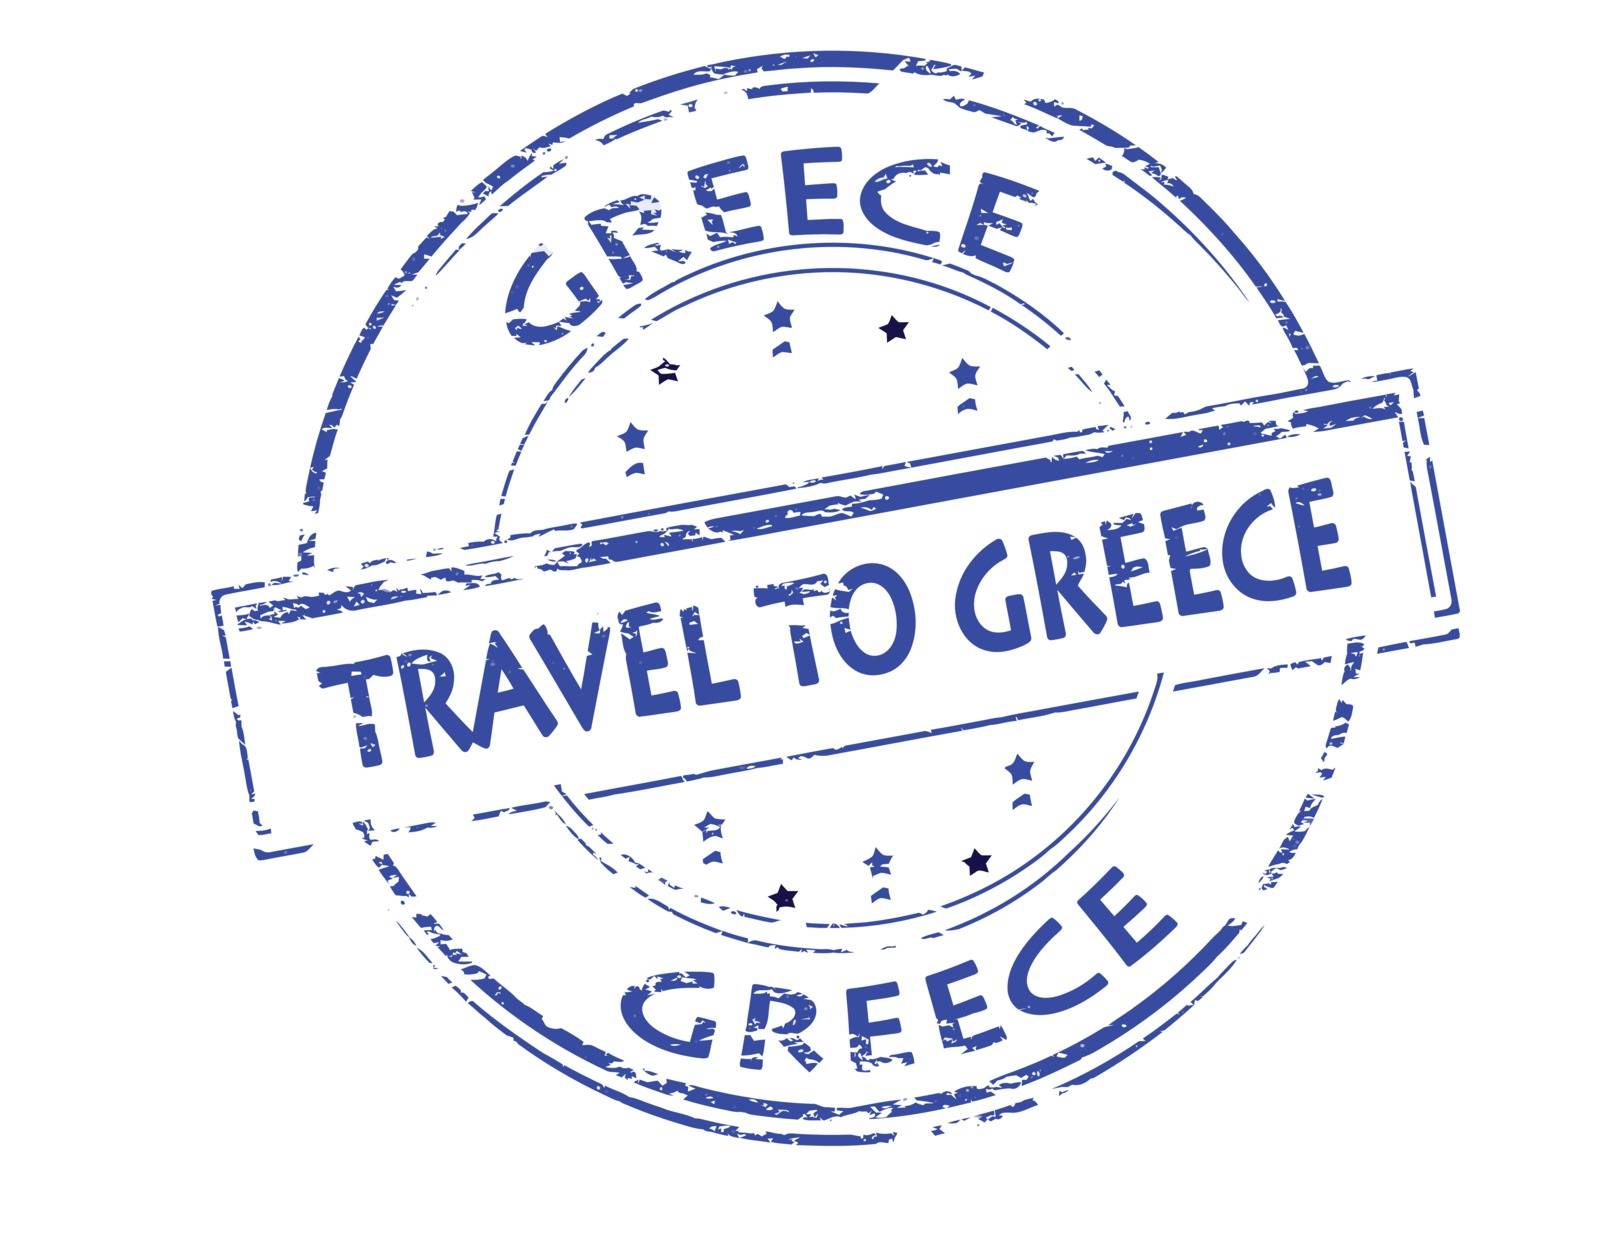 Travel to Greece by carmenbobo